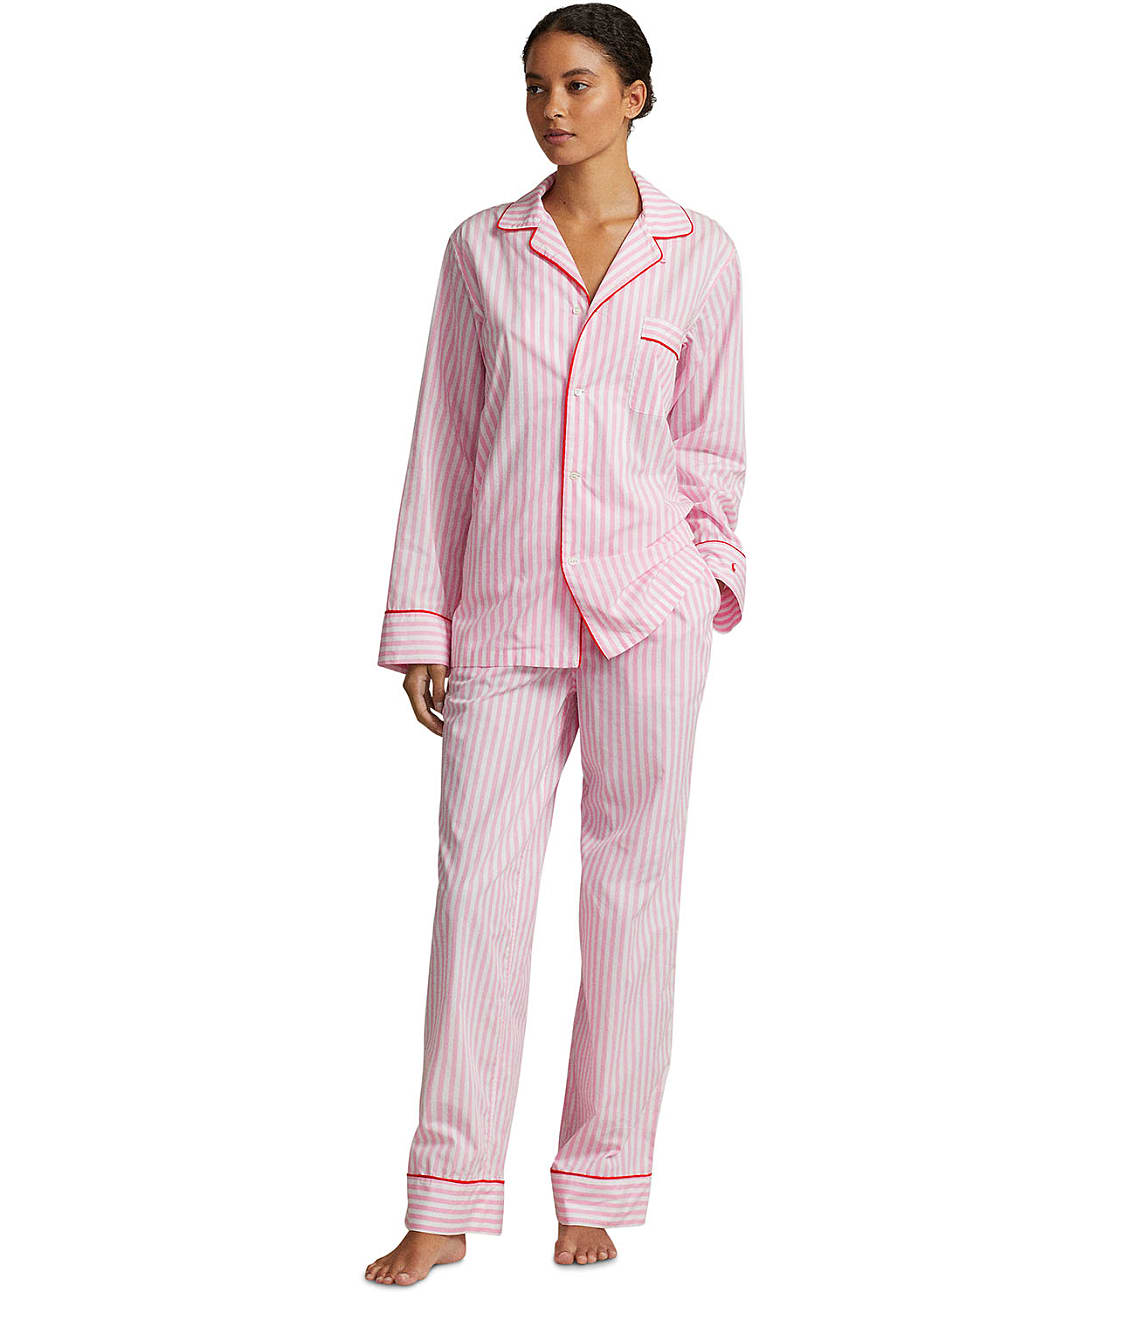 Polo Ralph Lauren: The Madison Woven Pajama Set 4P8036